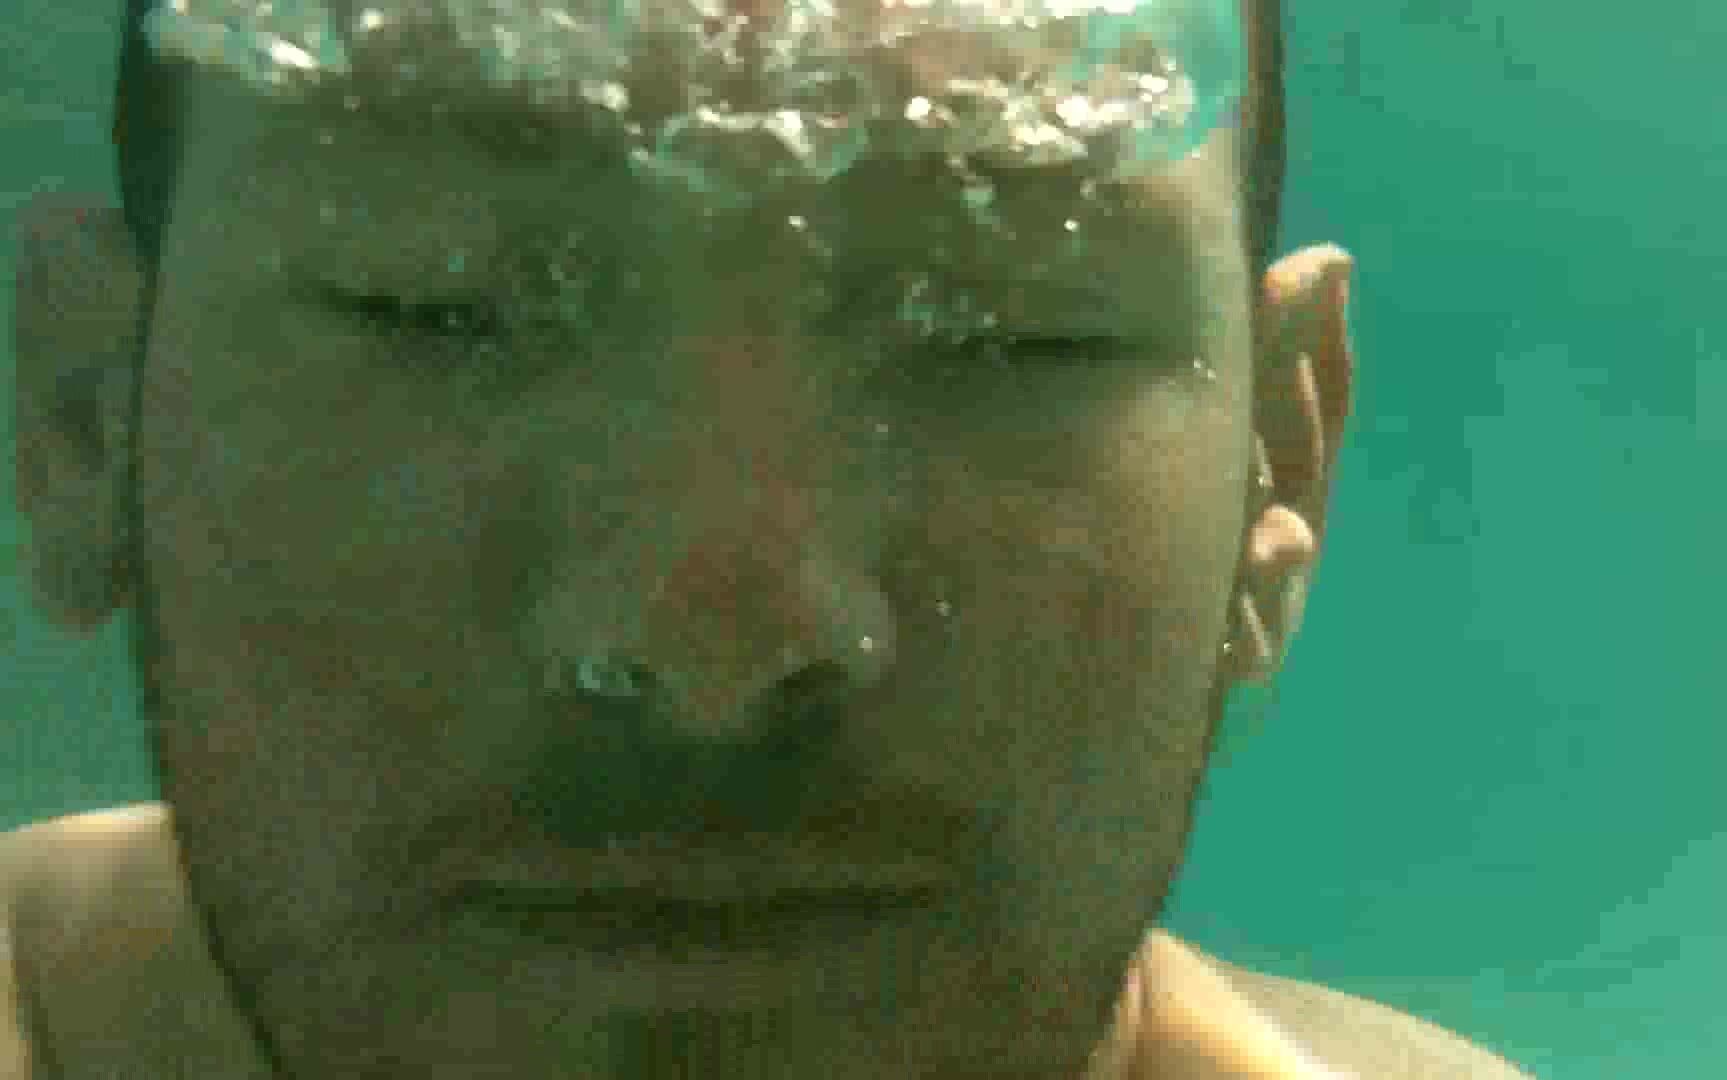 Testing camera barefaced underwater